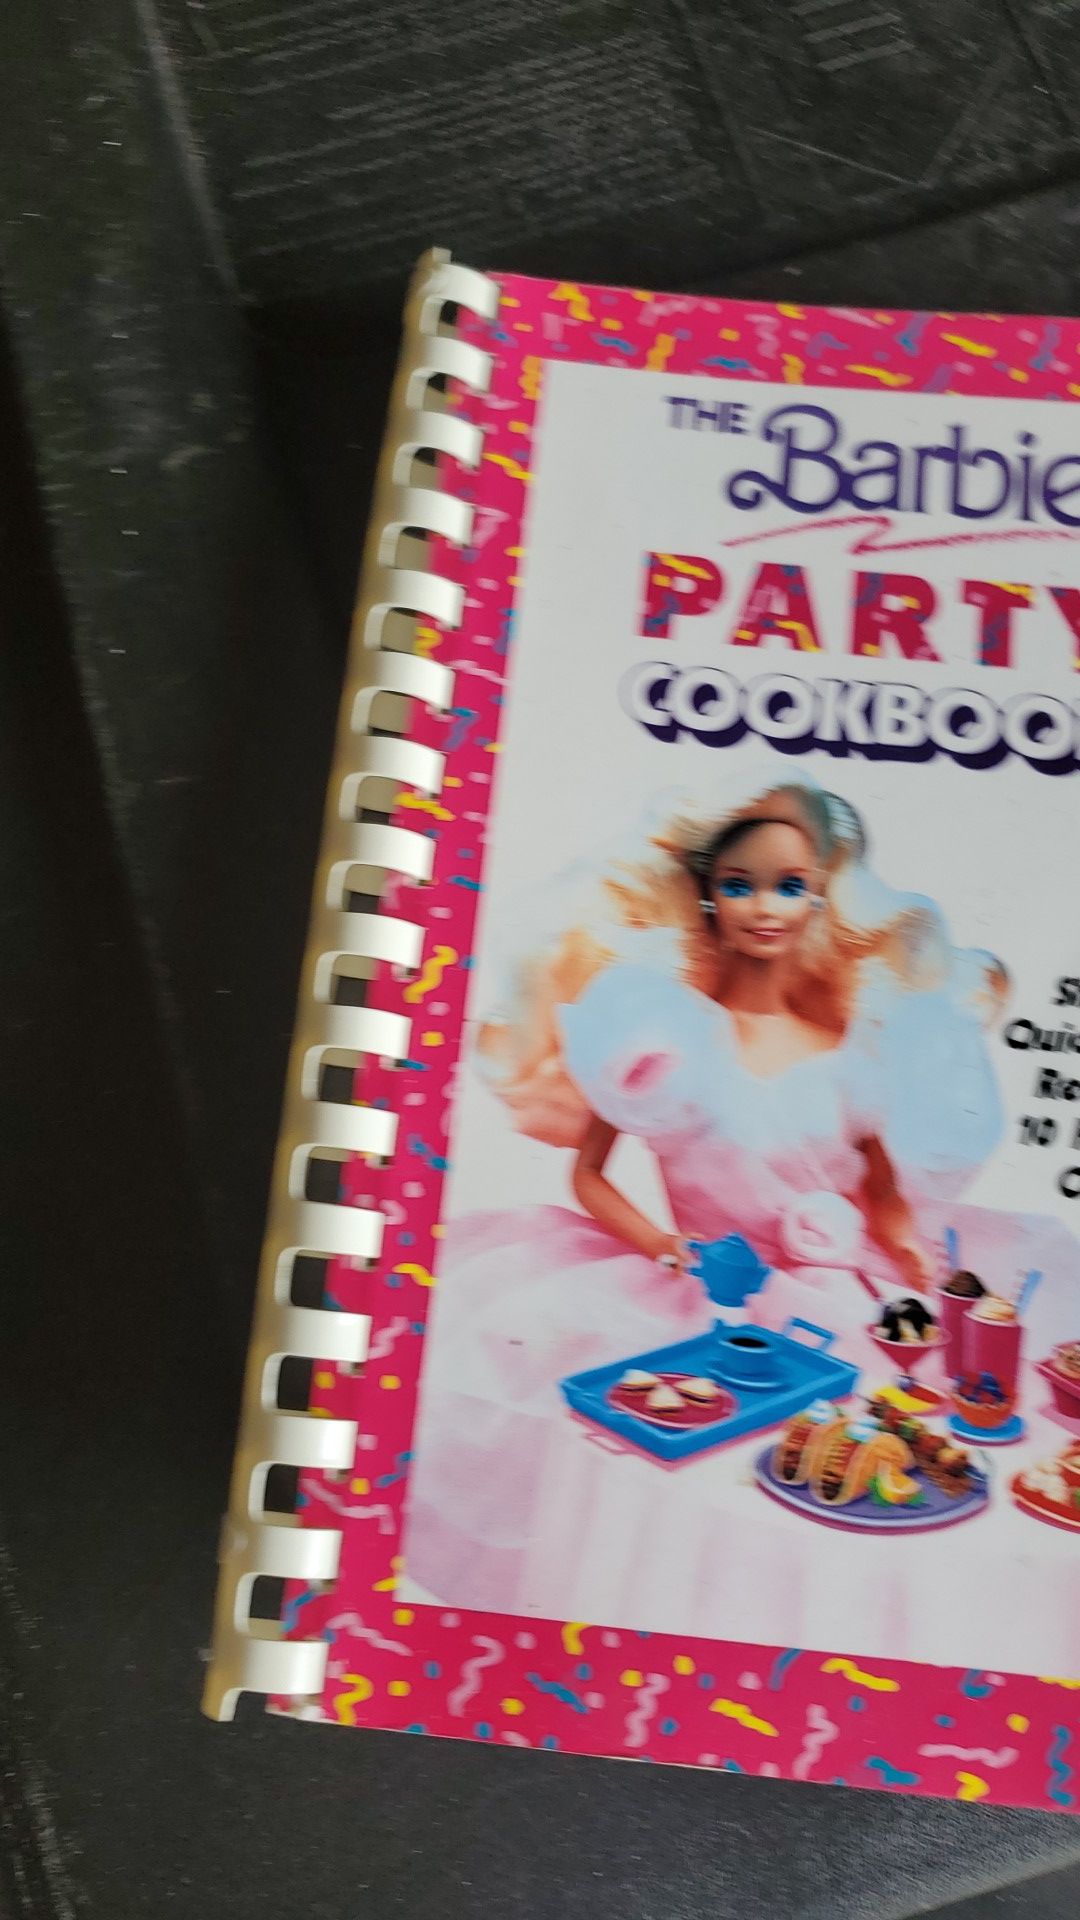 Barbie party cookbook